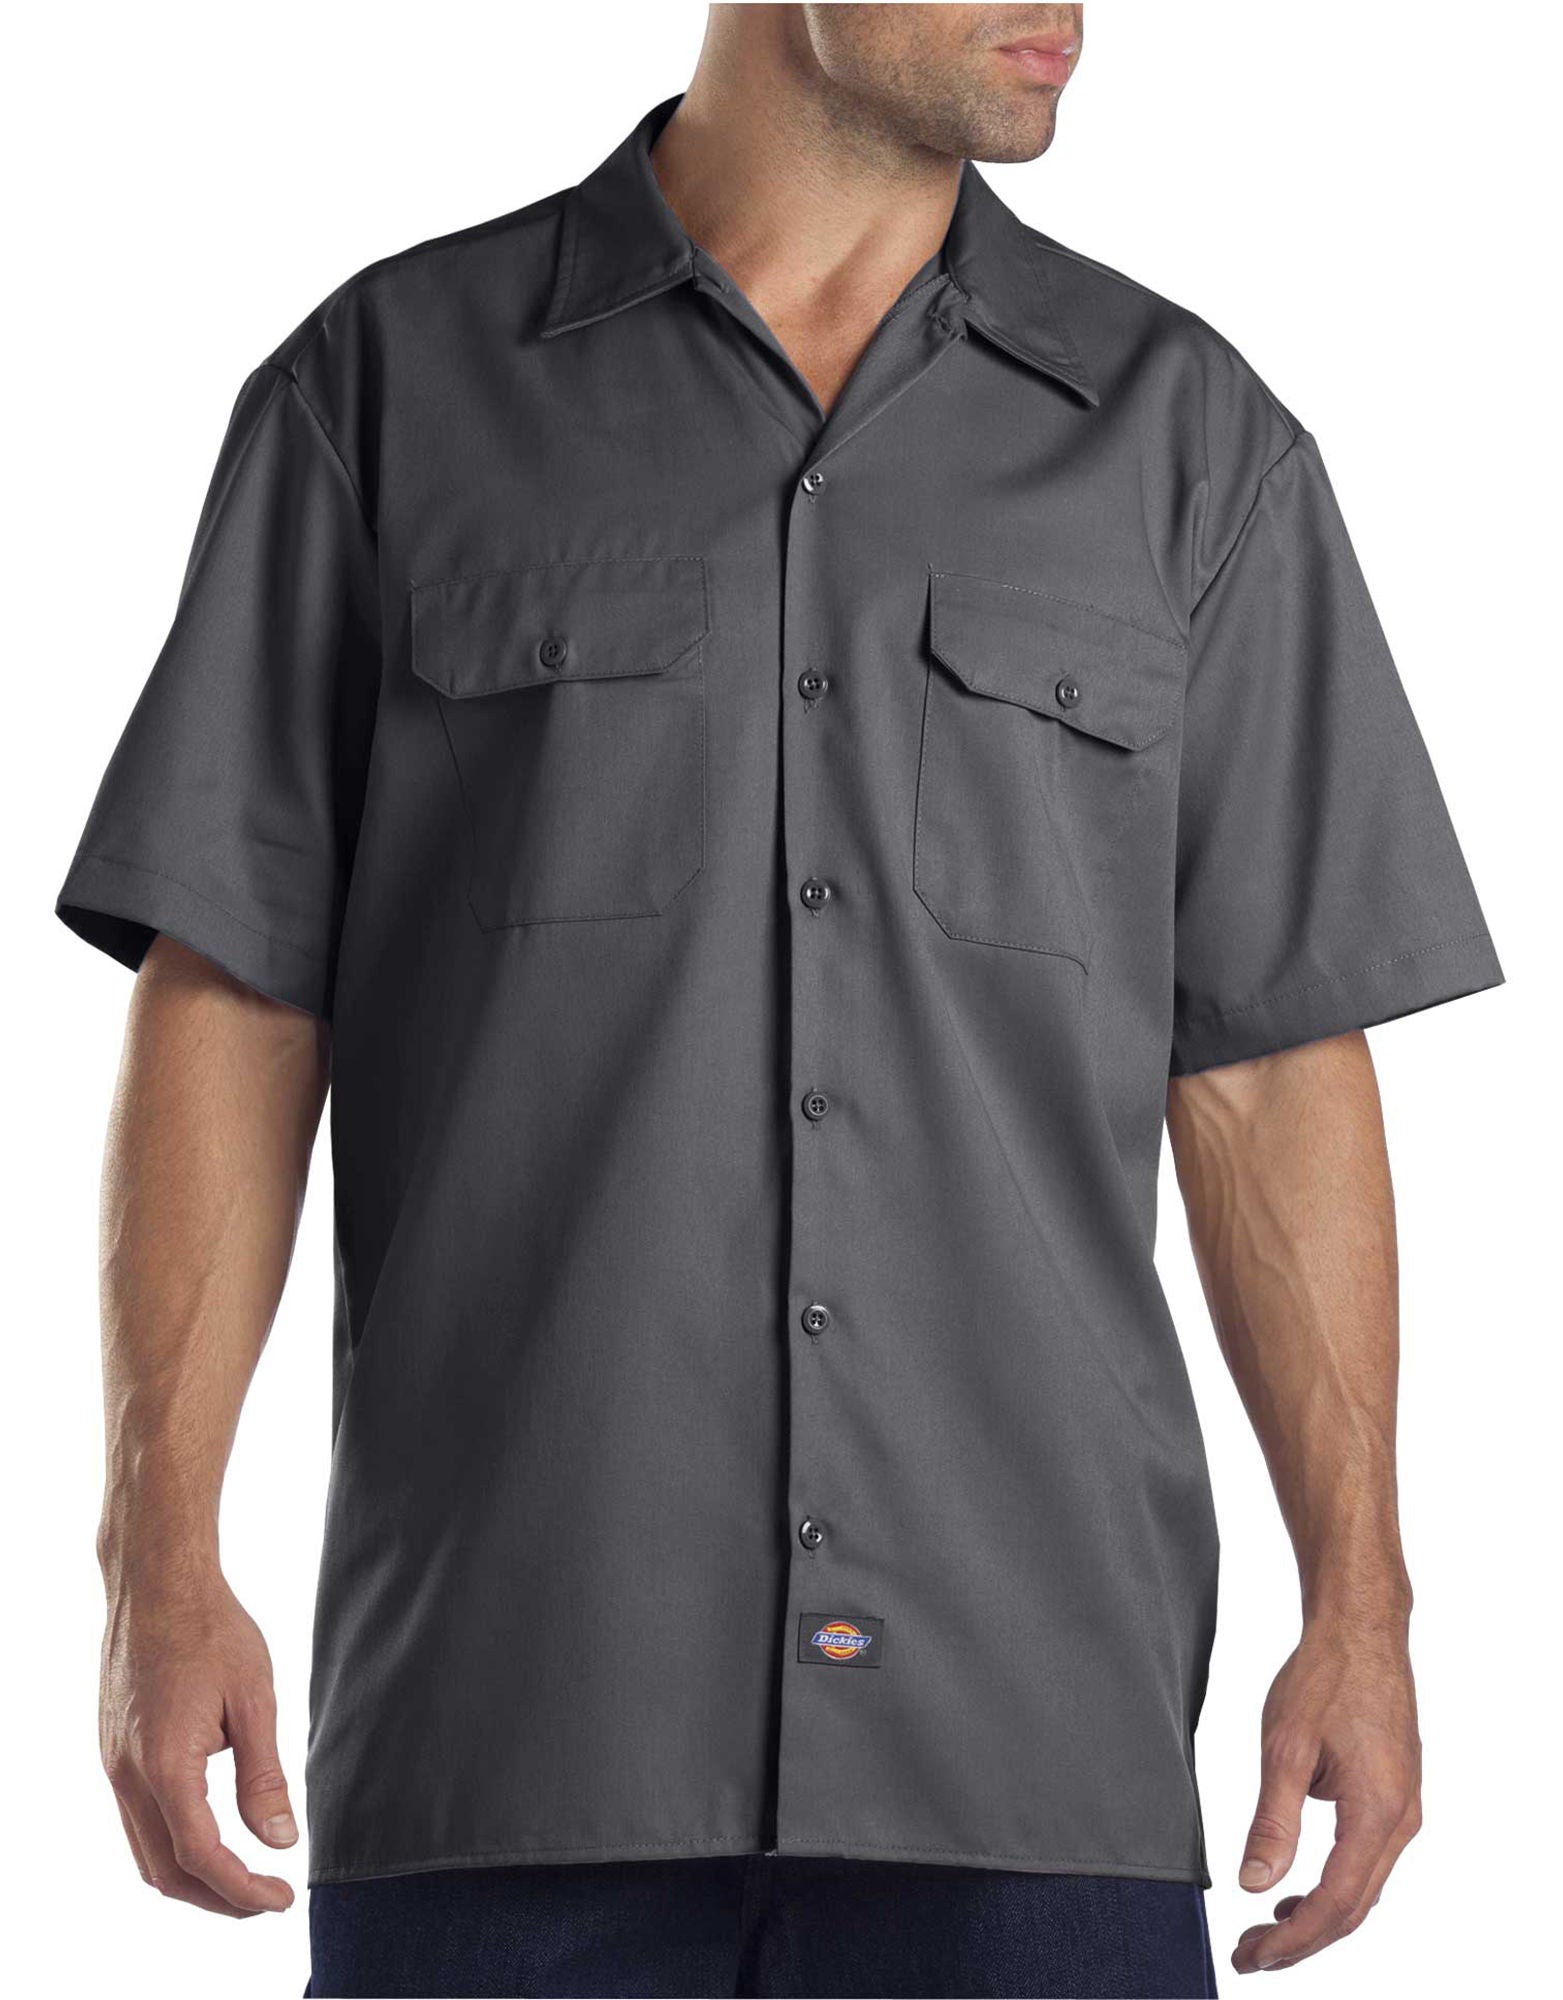 DICKIES Work Shirt with short sleeve for men black - khaki - charcoal grey